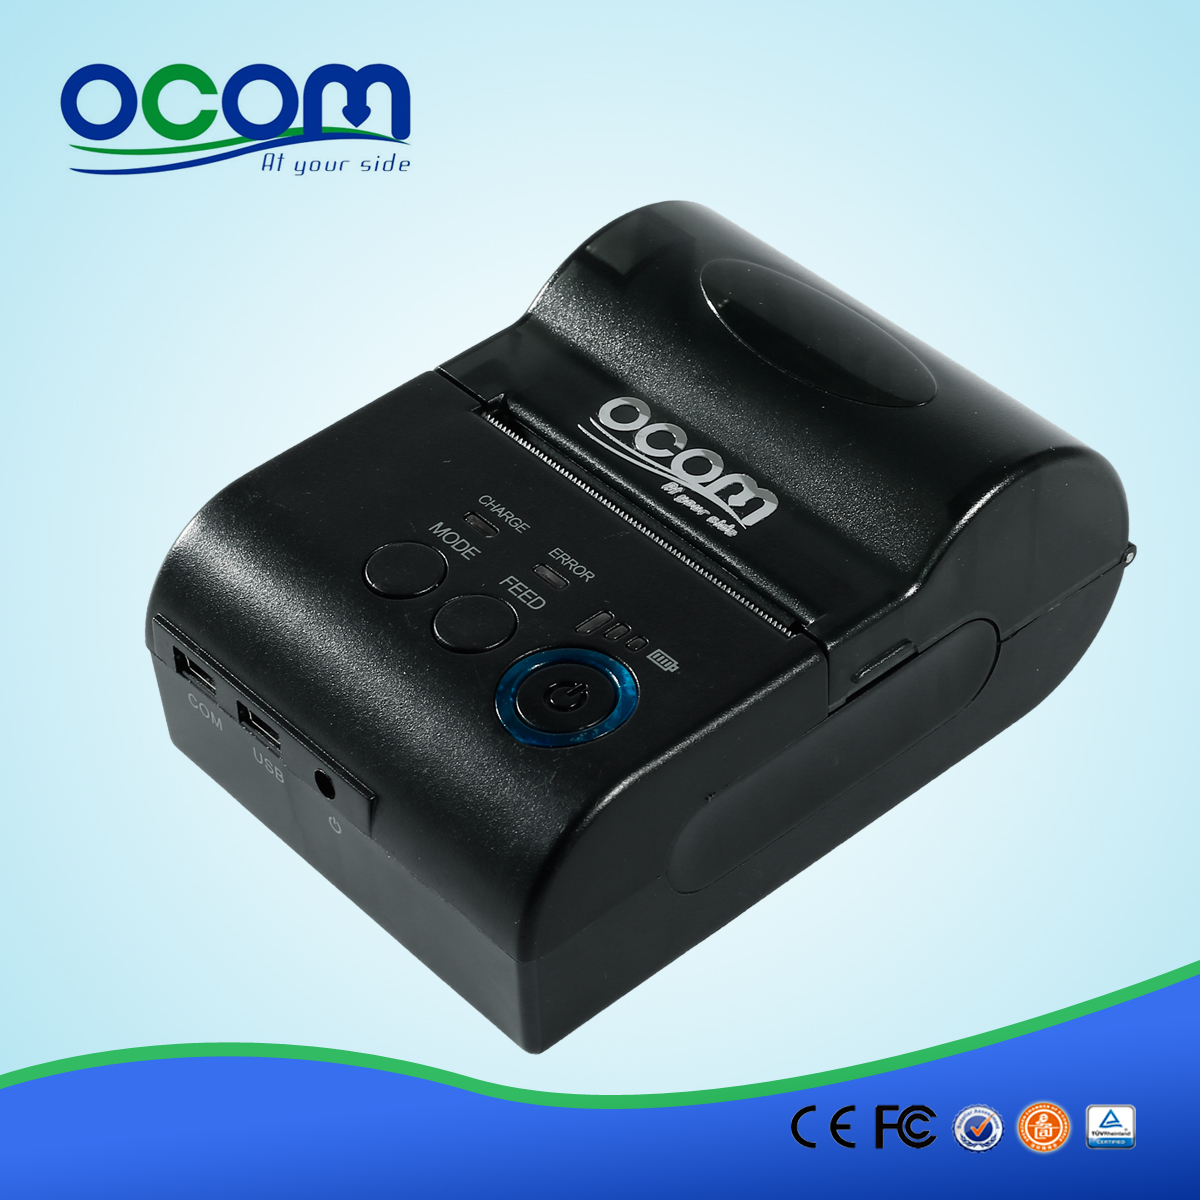 OCPP-M03 58mm Mini Portable Bluetooth Thermal Printer